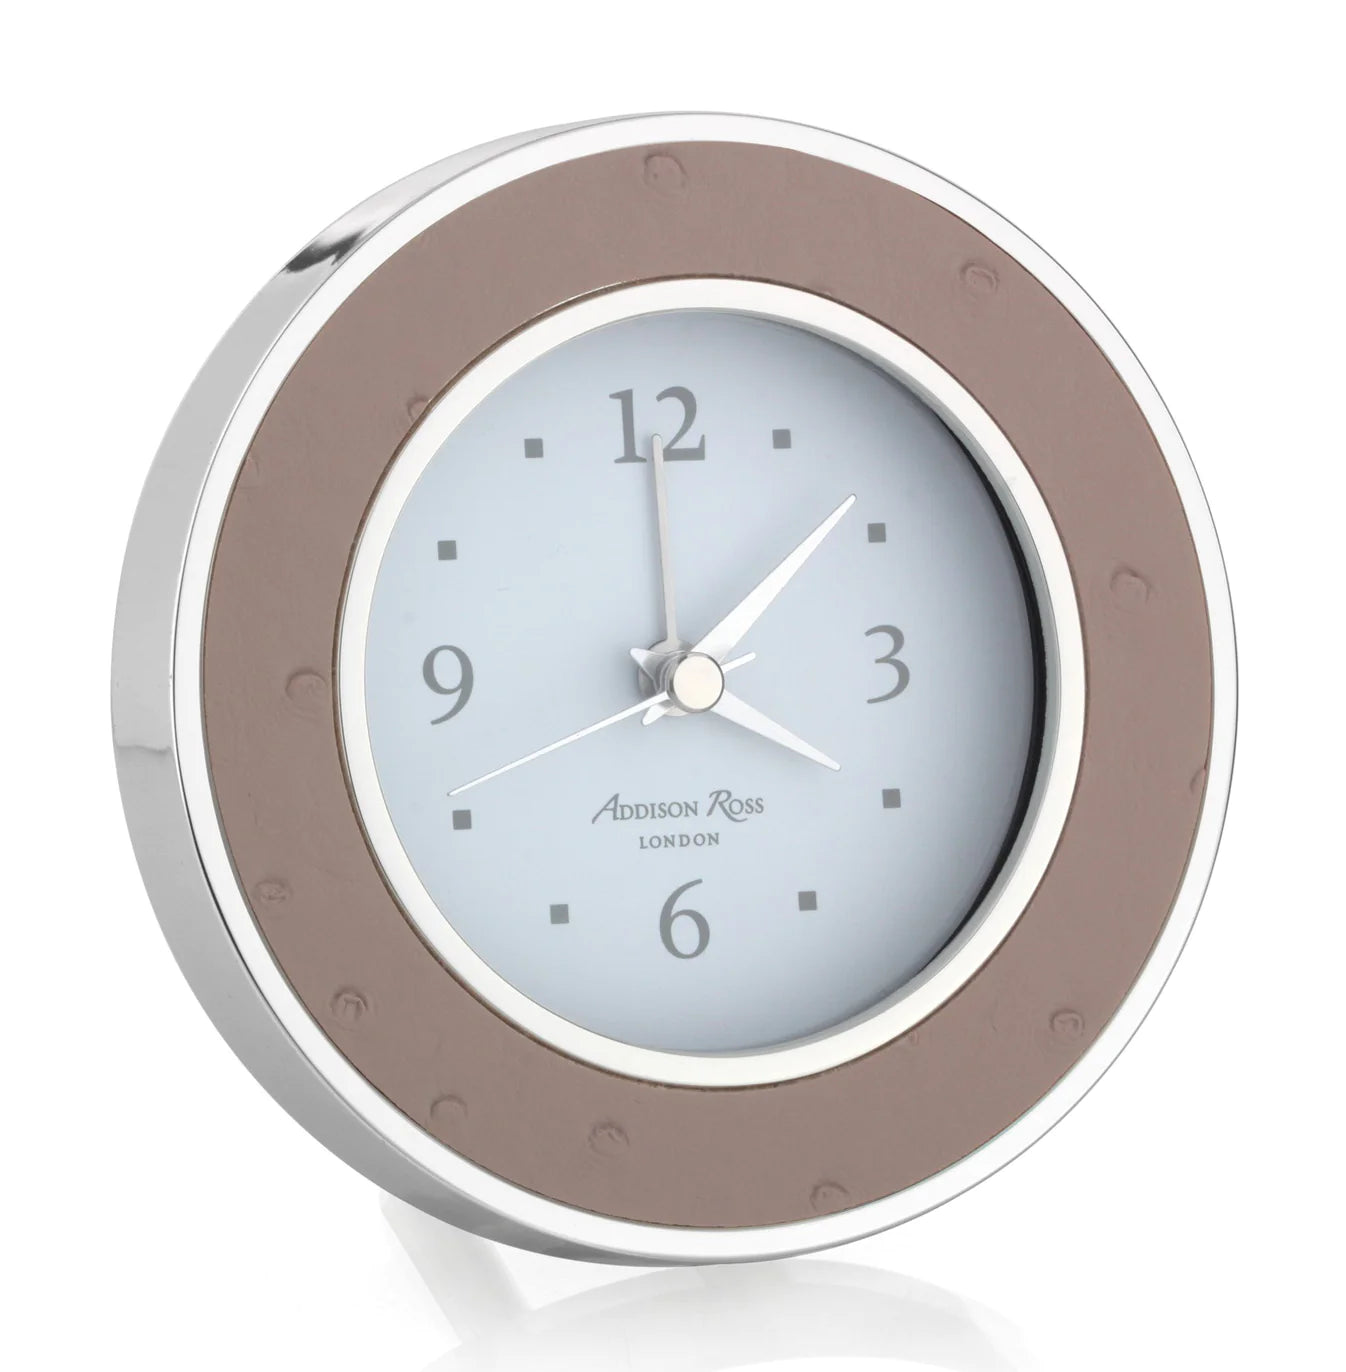 Blush Ostrich Silver Alarm Clock by Addison Ross